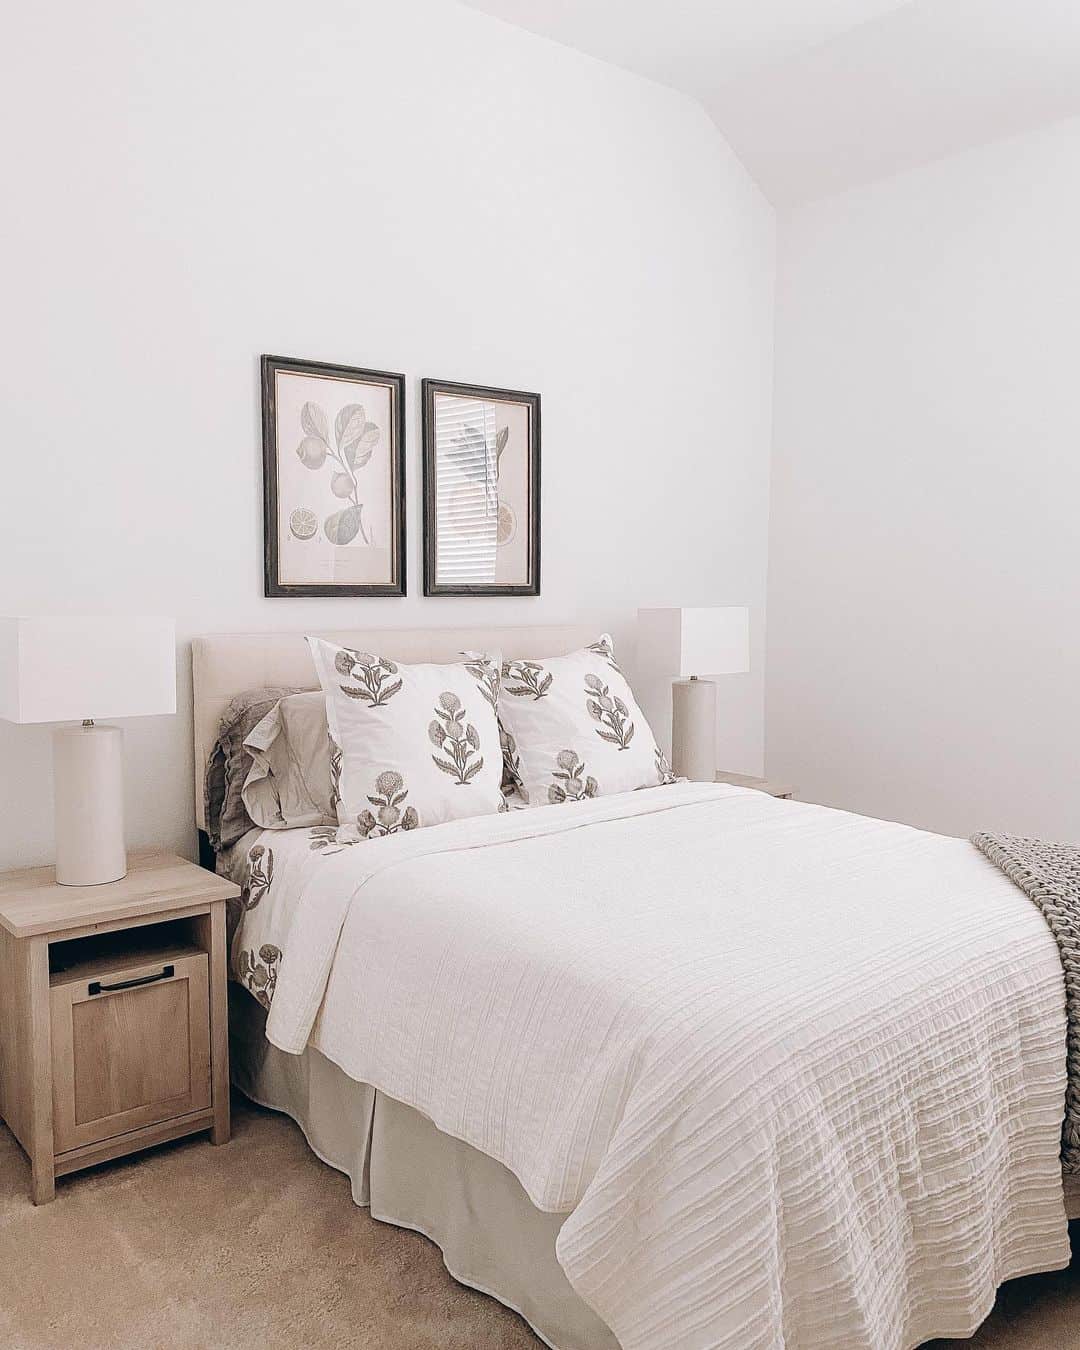 Tranquil Guest Bedroom with Elegant Gray Frame Artwork